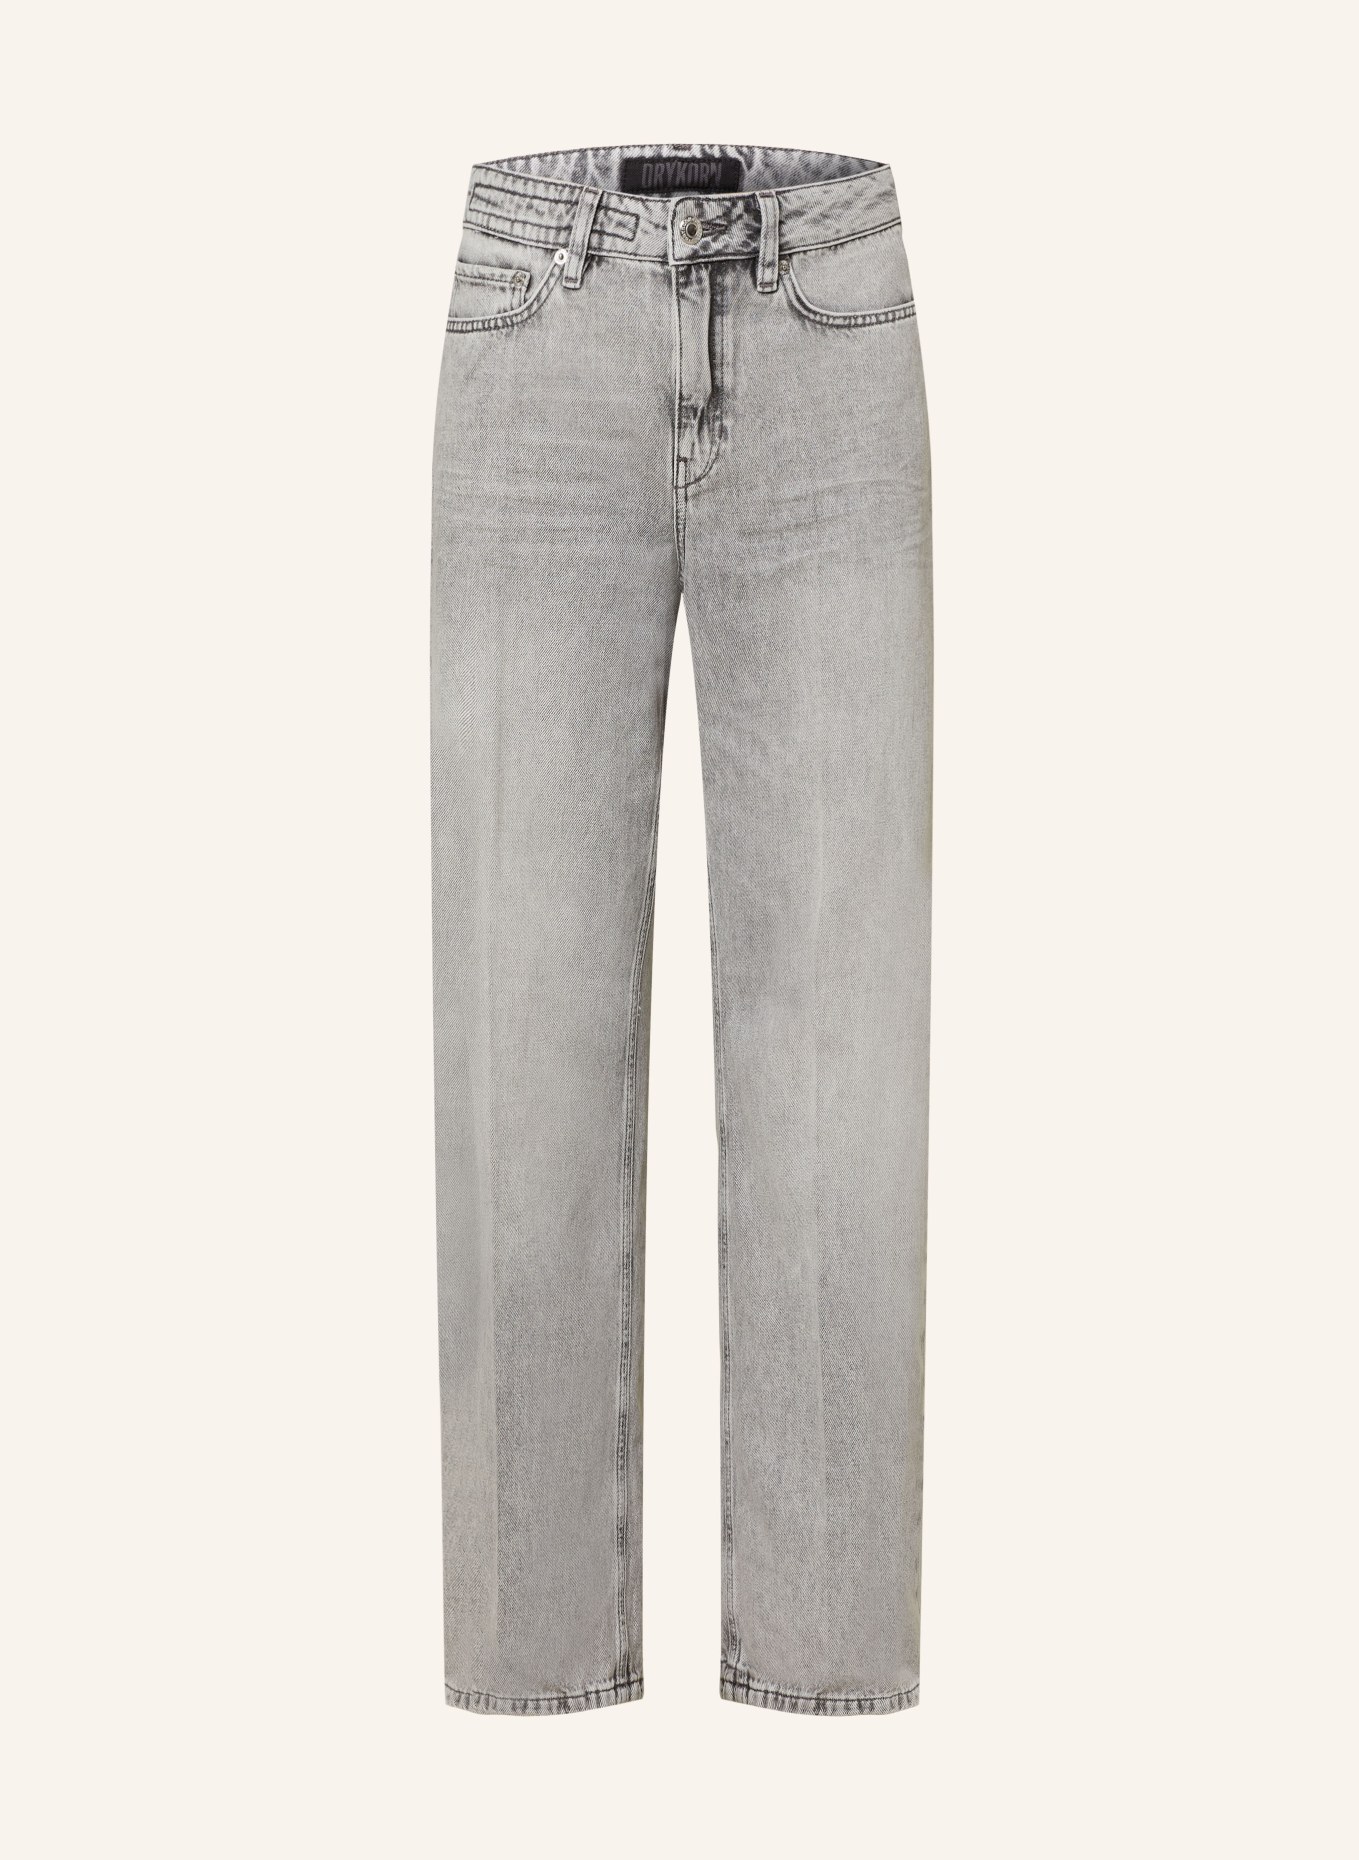 DRYKORN Jeans MEDLEY, Farbe: 6800 grau (Bild 1)